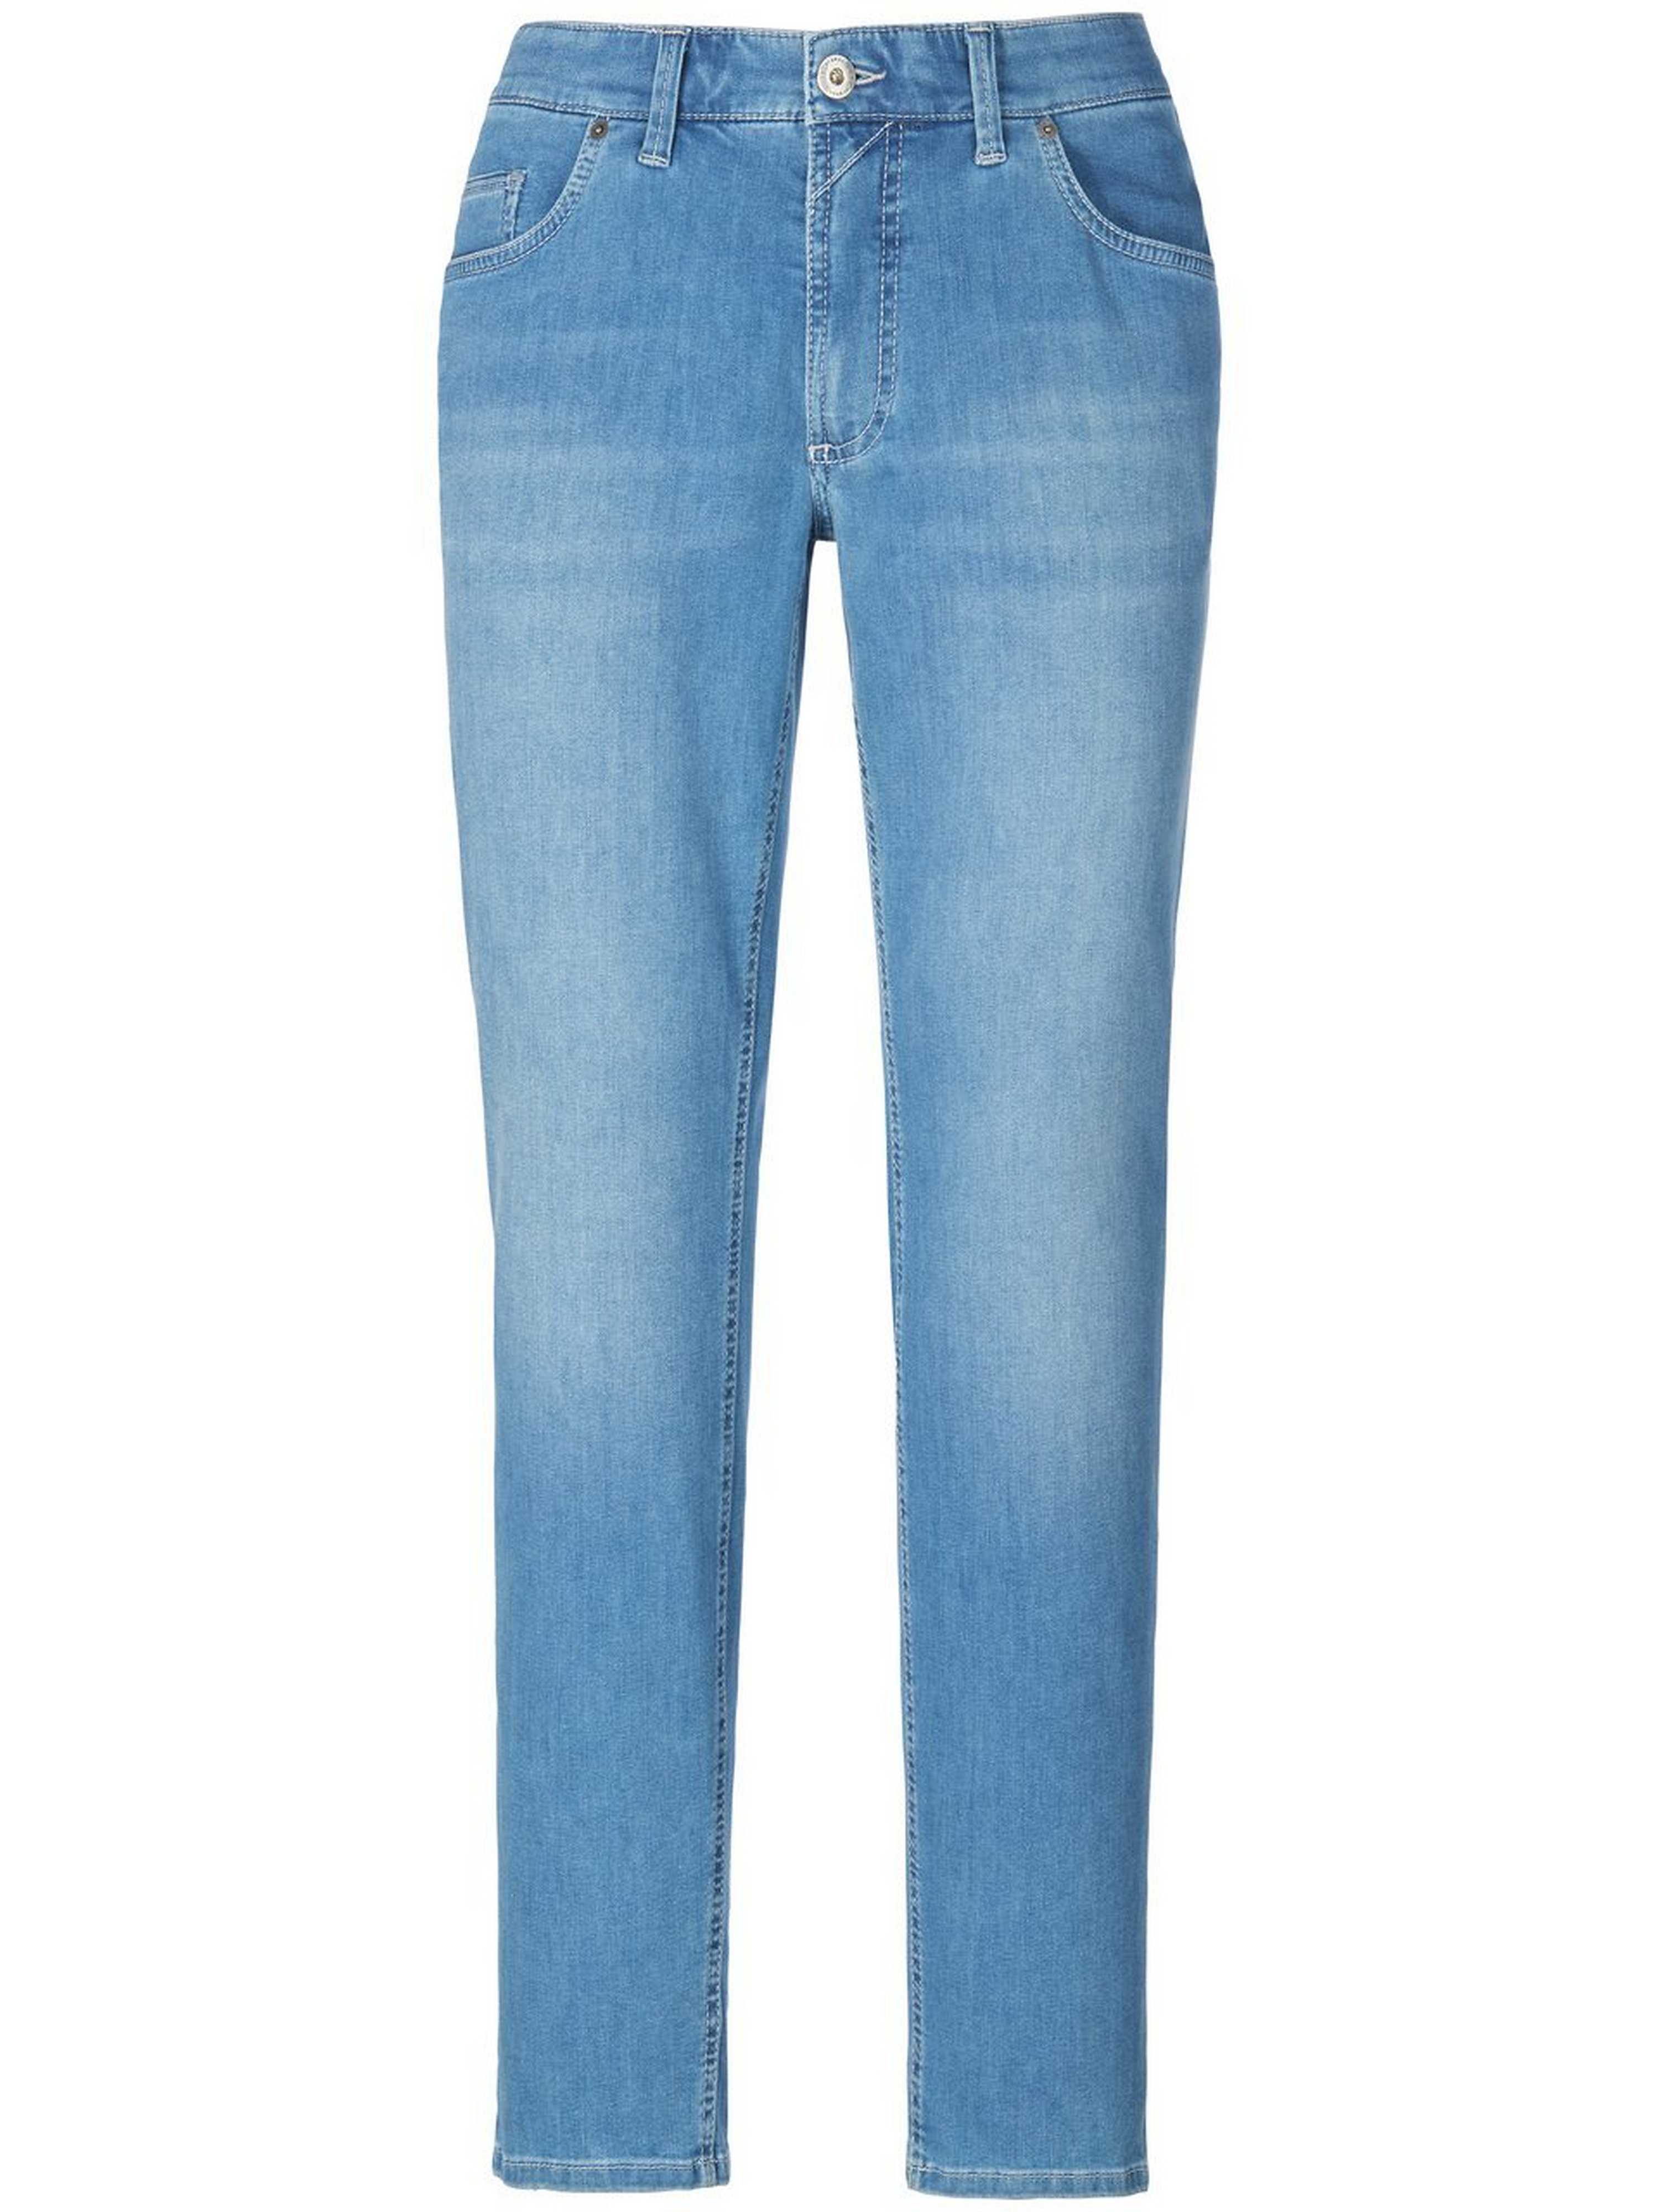 Jeans model Luke Van Eurex by Brax denim